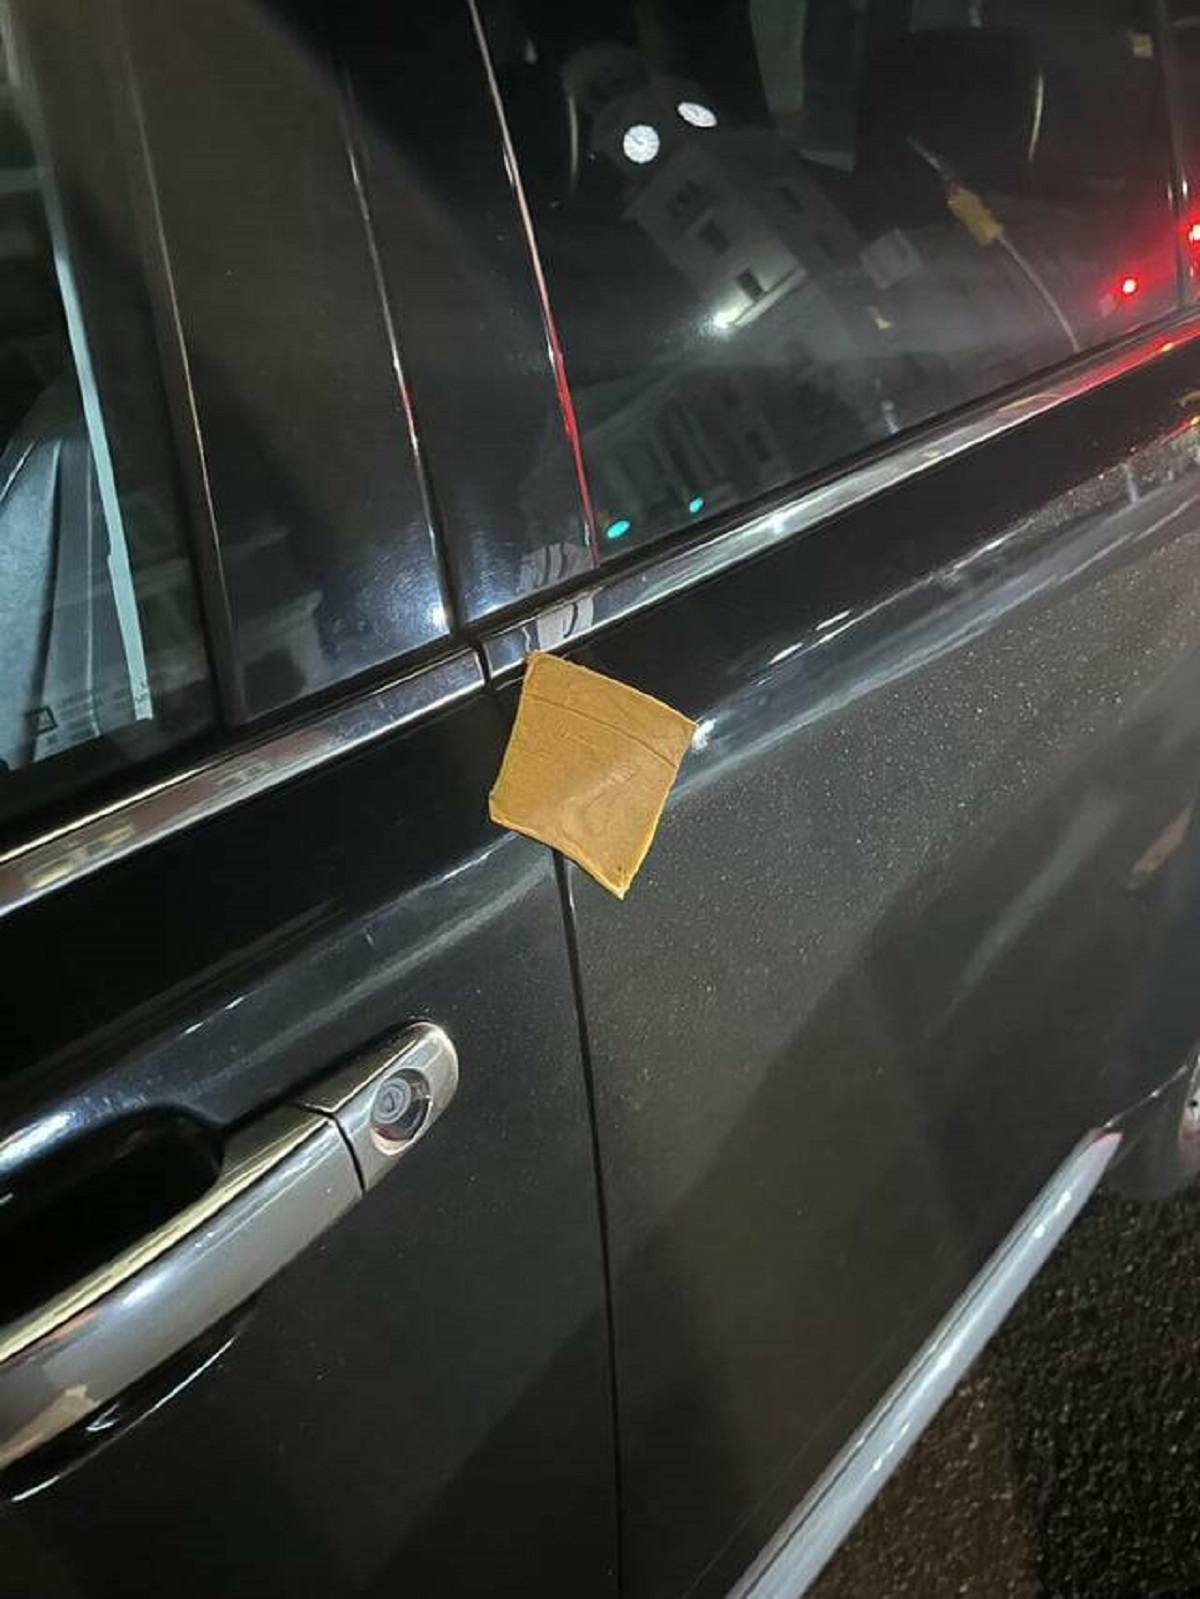 "My car got “Cheesed” Friday night"